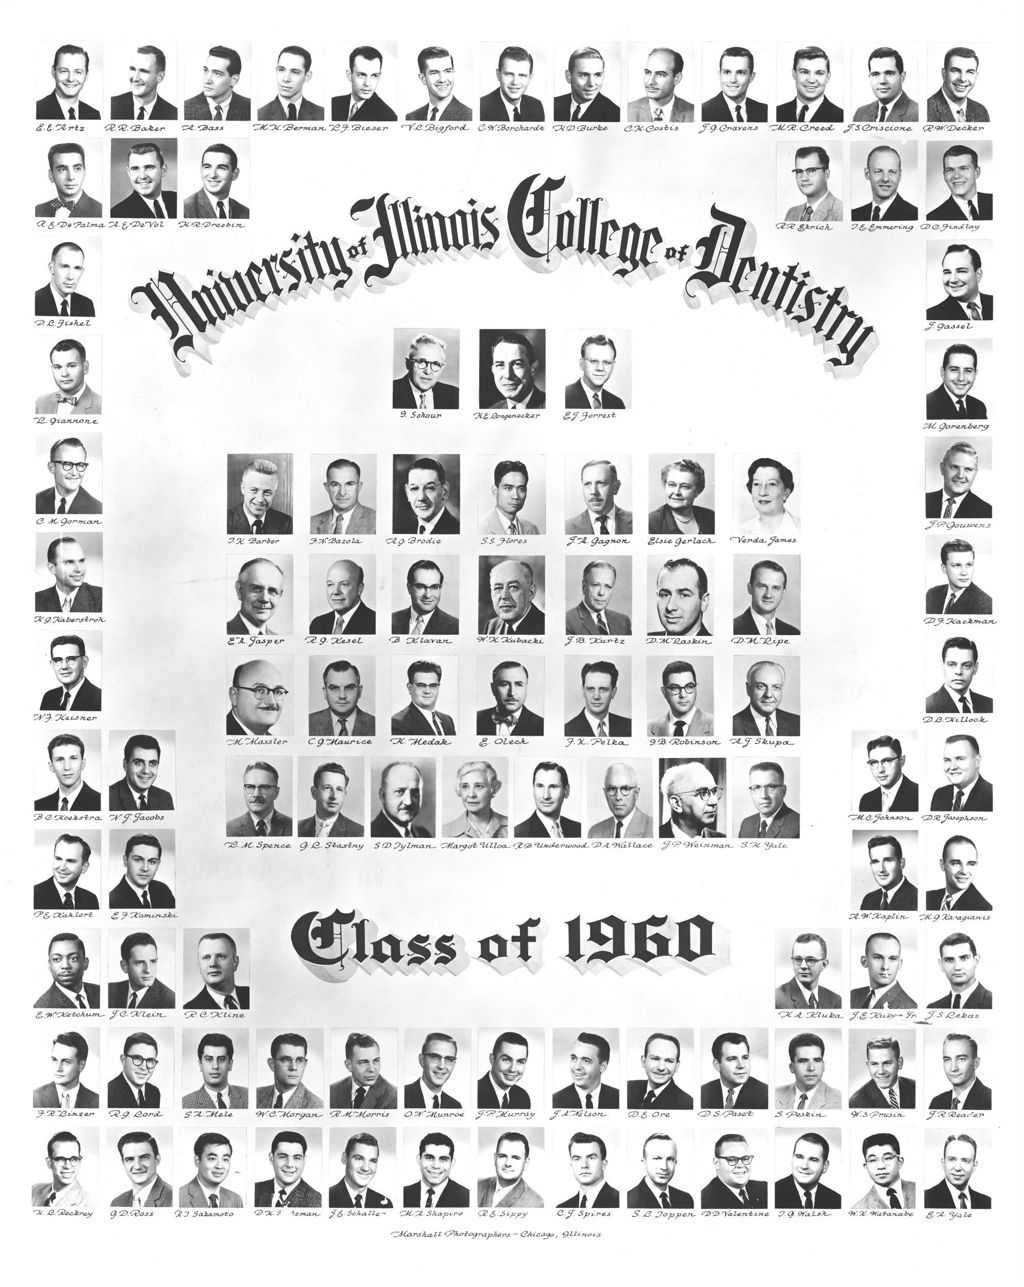 Miniature of 1960 graduating class, University of Illinois College of Dentistry